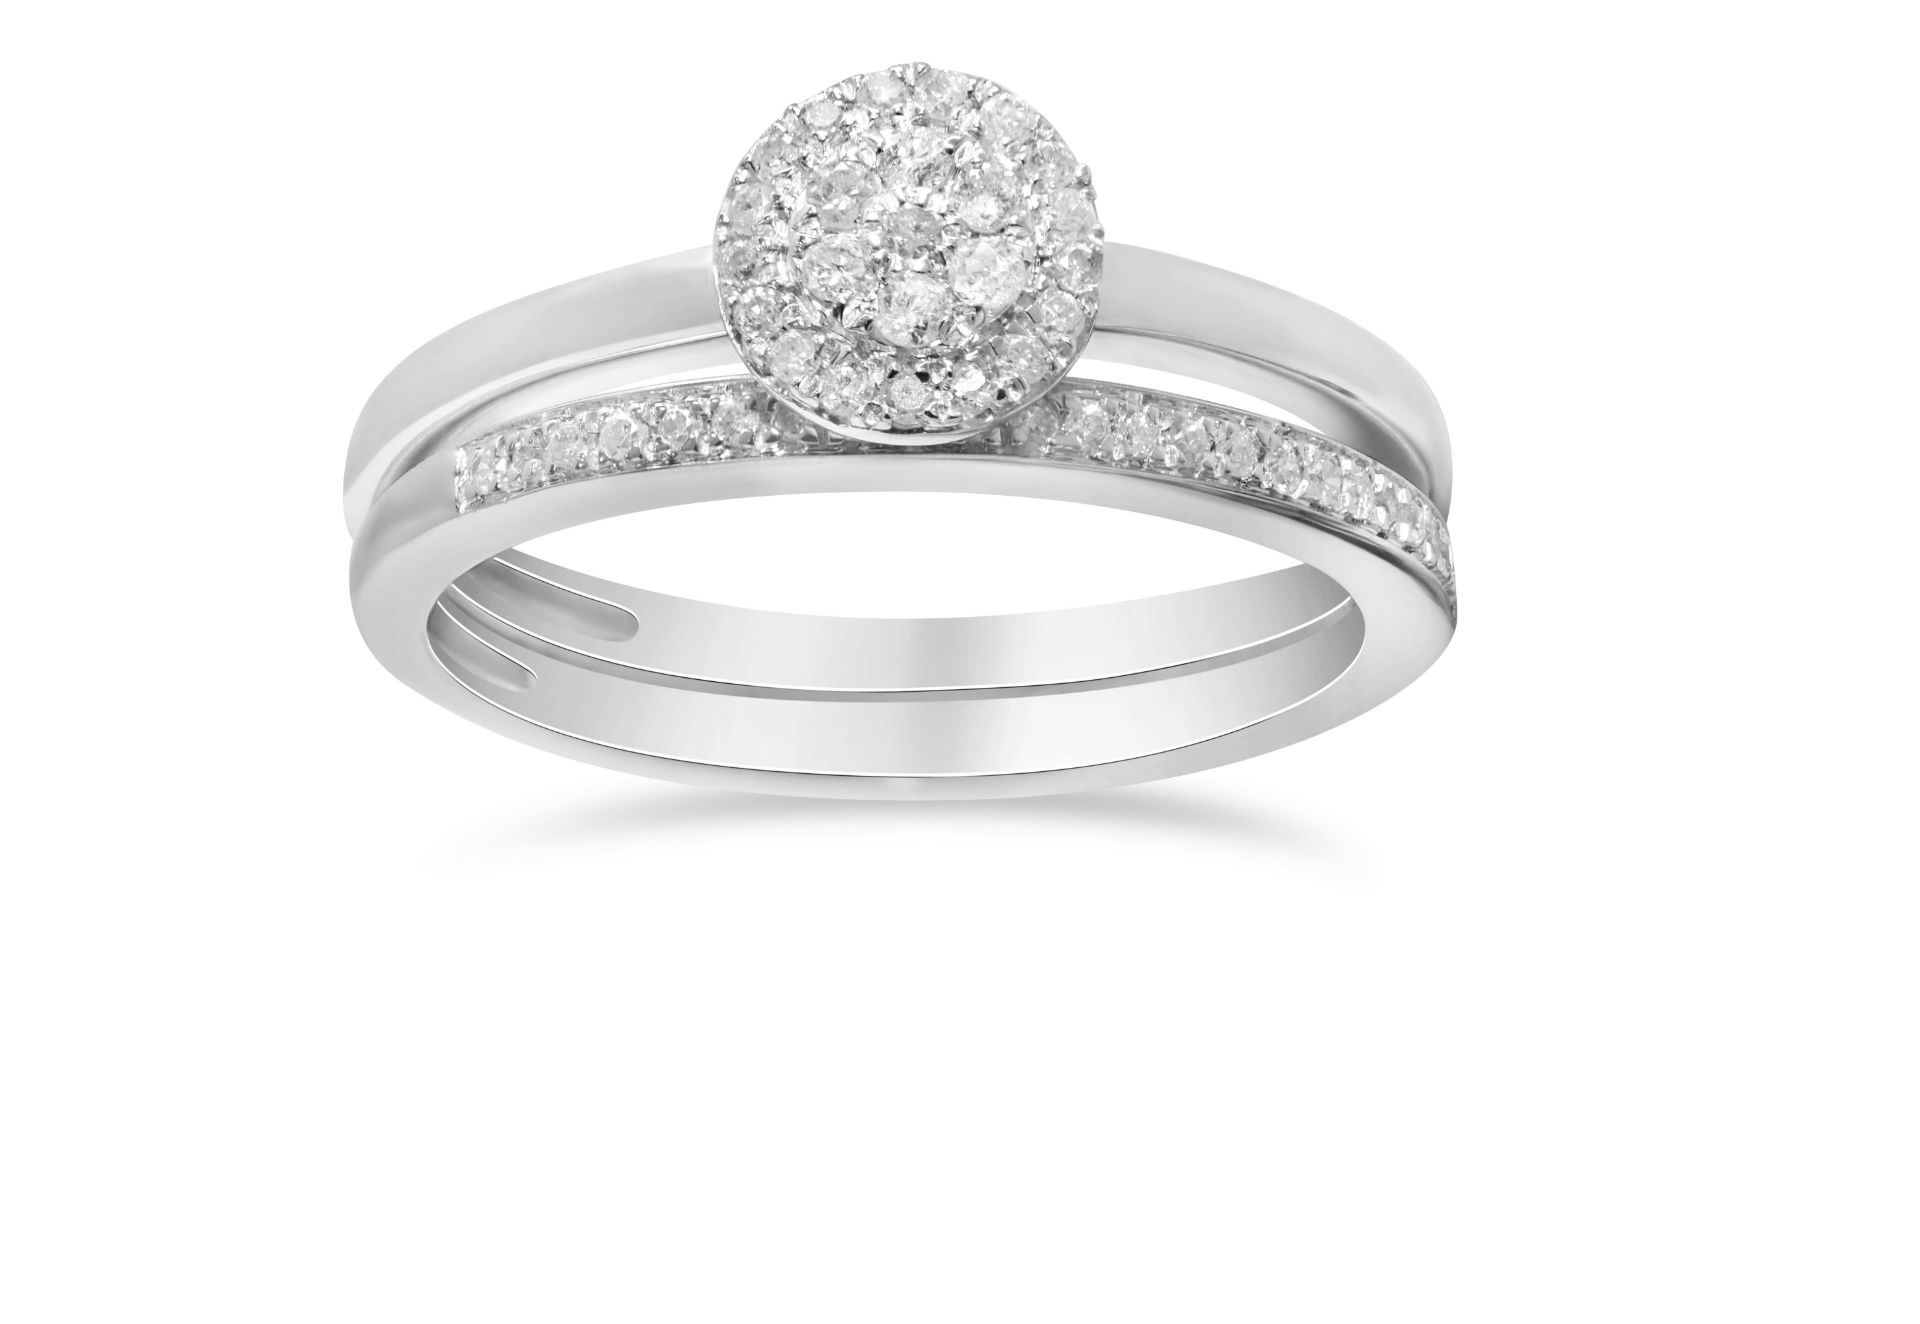 Matching Bridal Set of Engagement and Wedding ring - 2 white gold diamond rings